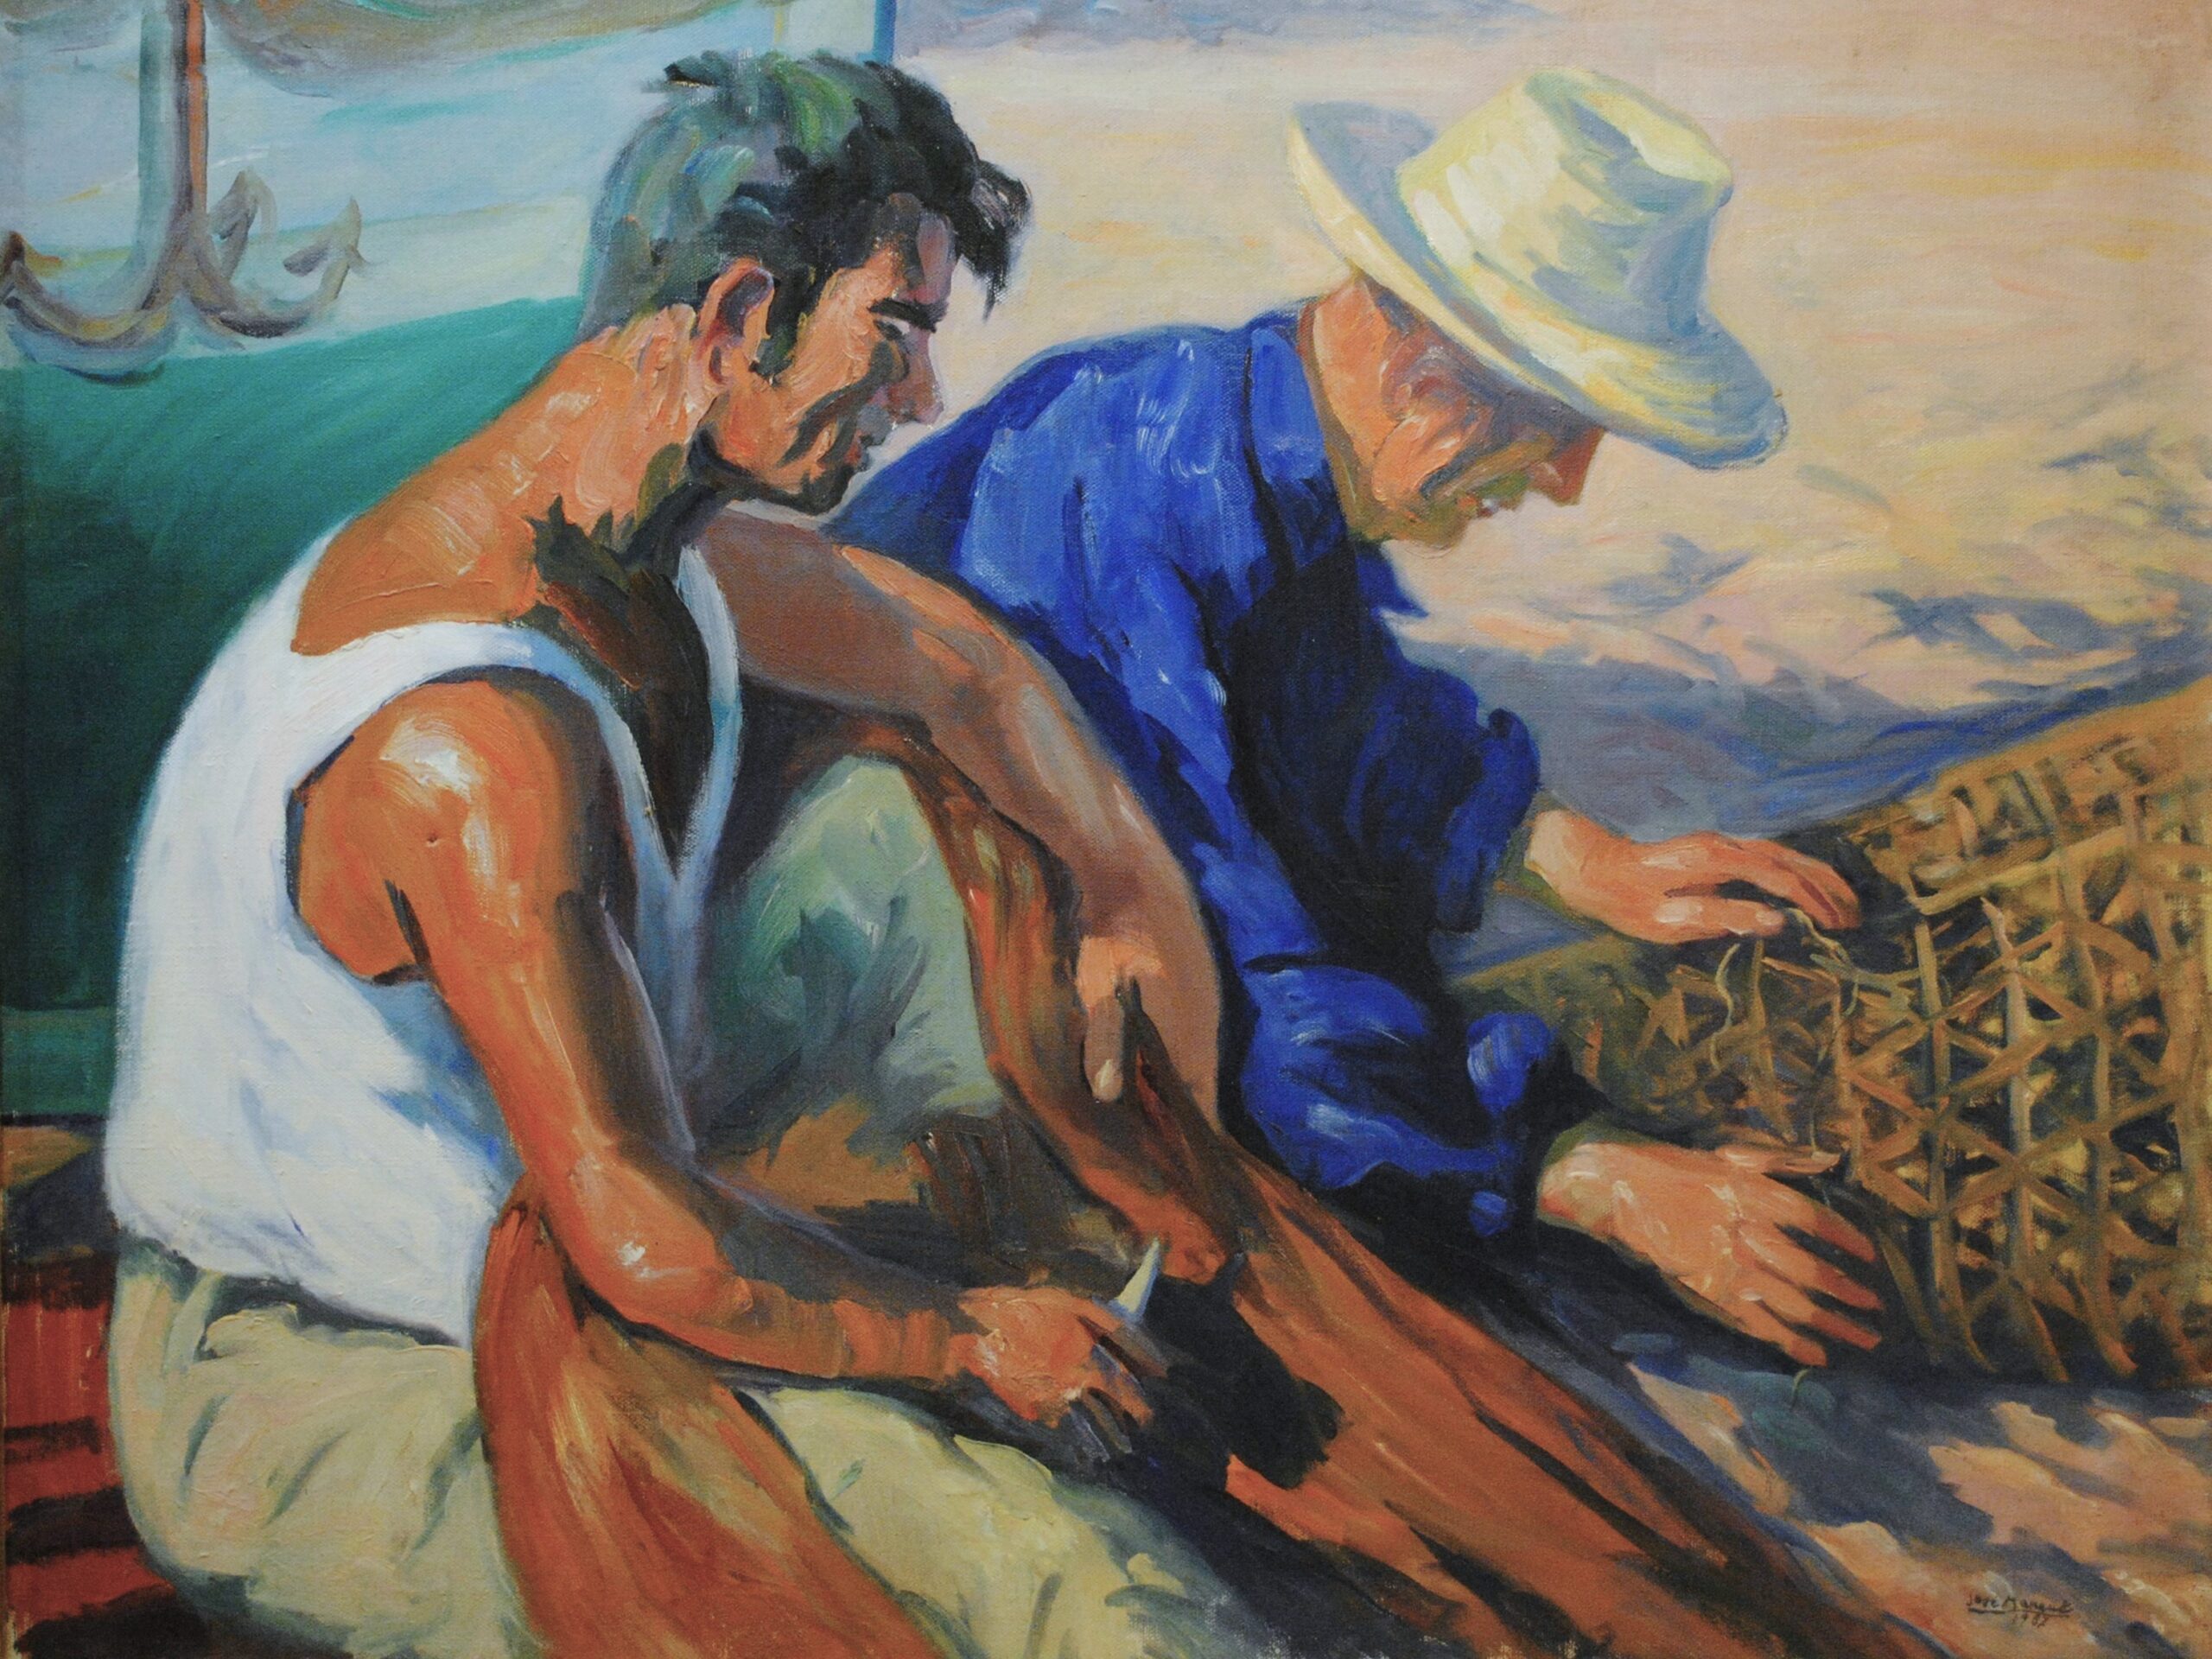 Pintura de José Manaut titulada Pescadores levantinos, 1967. Óleo sobre lienzo.